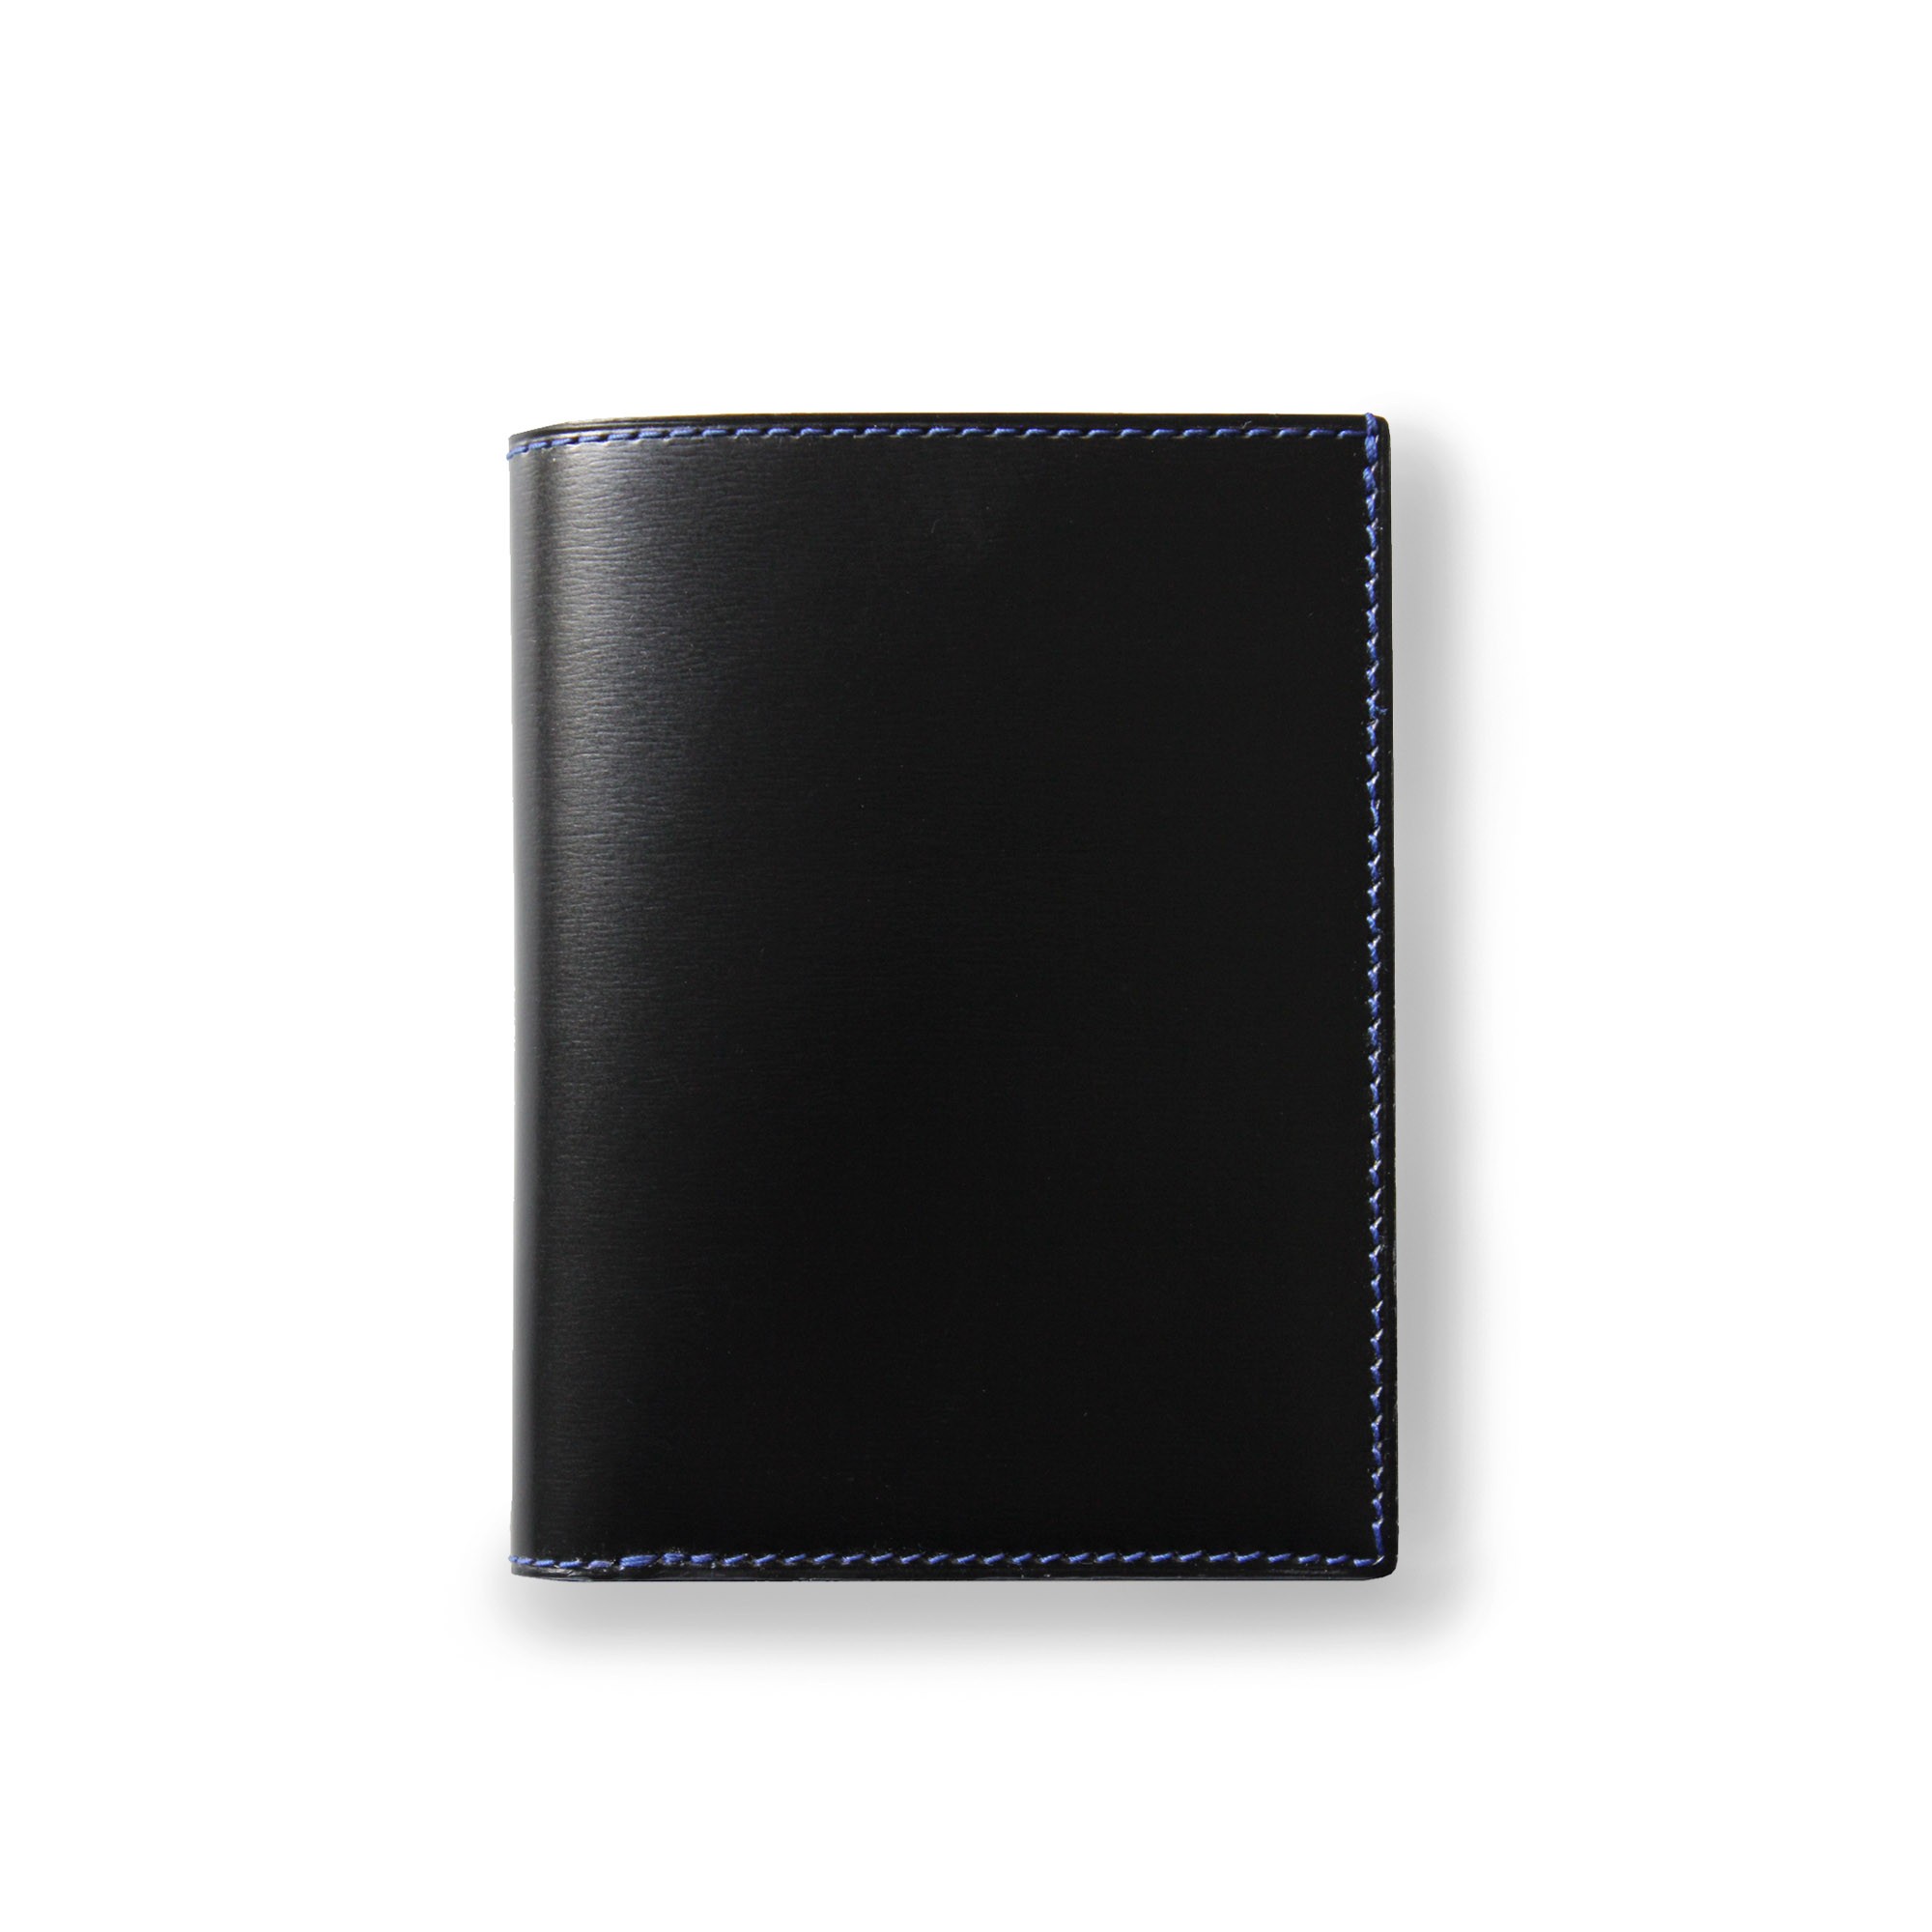 VENDÔME - calfskin wallet in black and Royal blue color - close